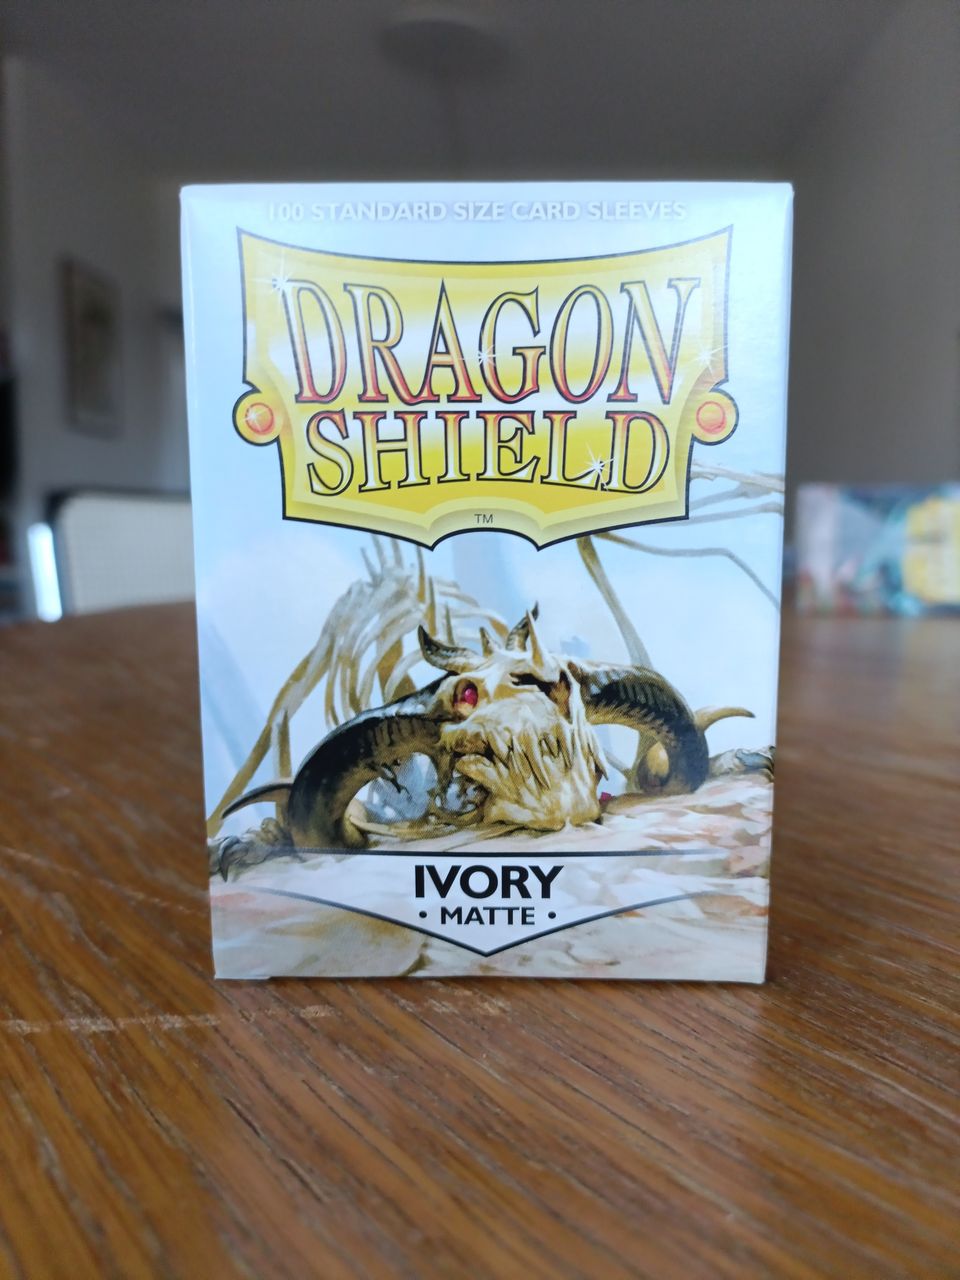 Dragon shield, Ivory Matte, 100 standard size card sleeves